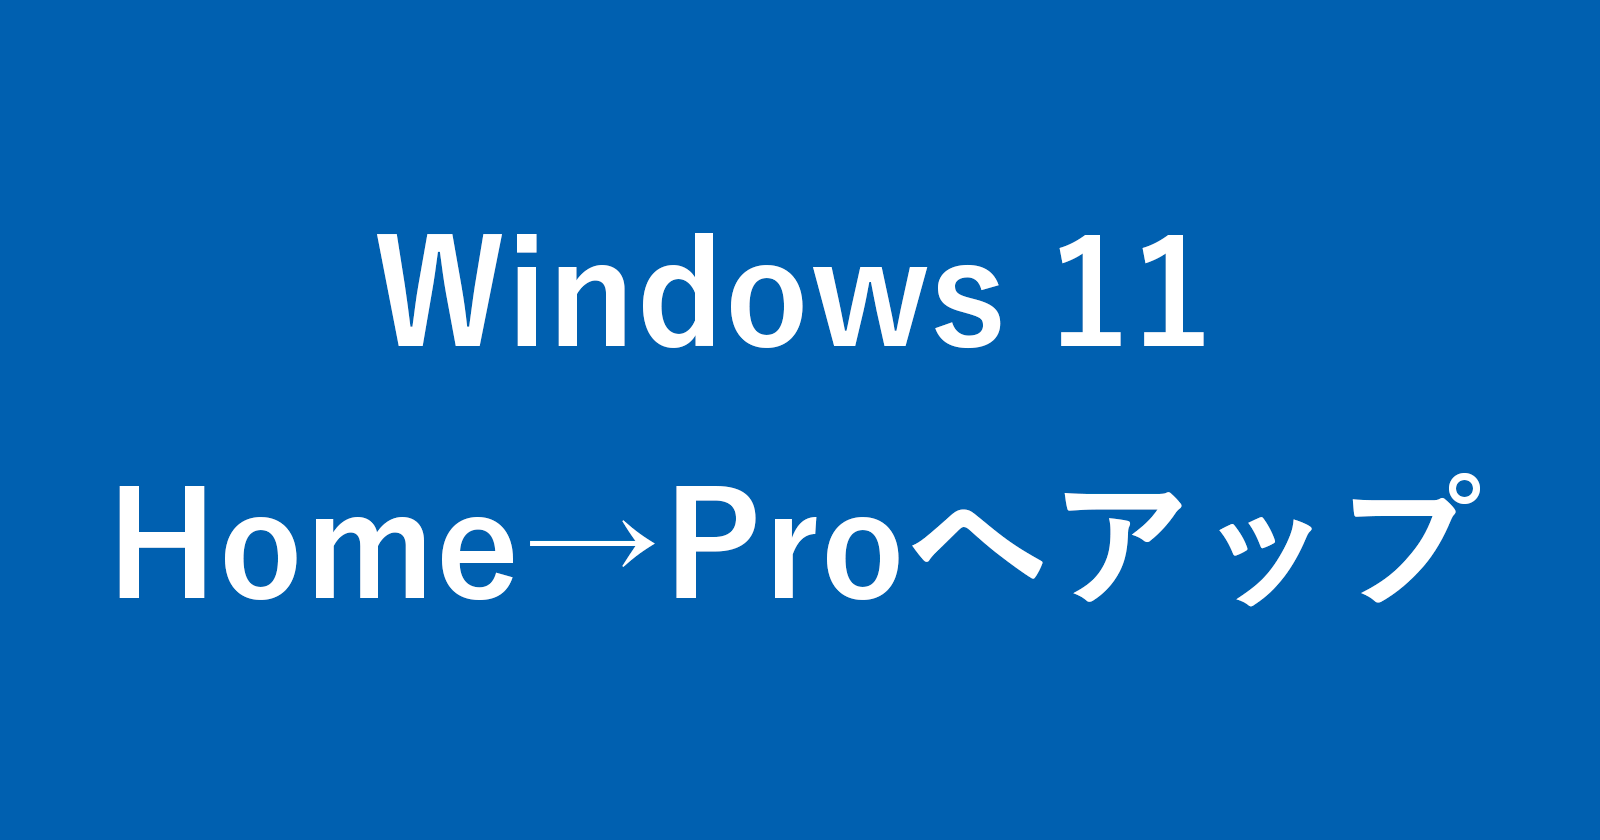 windows 11 home pro upgrade